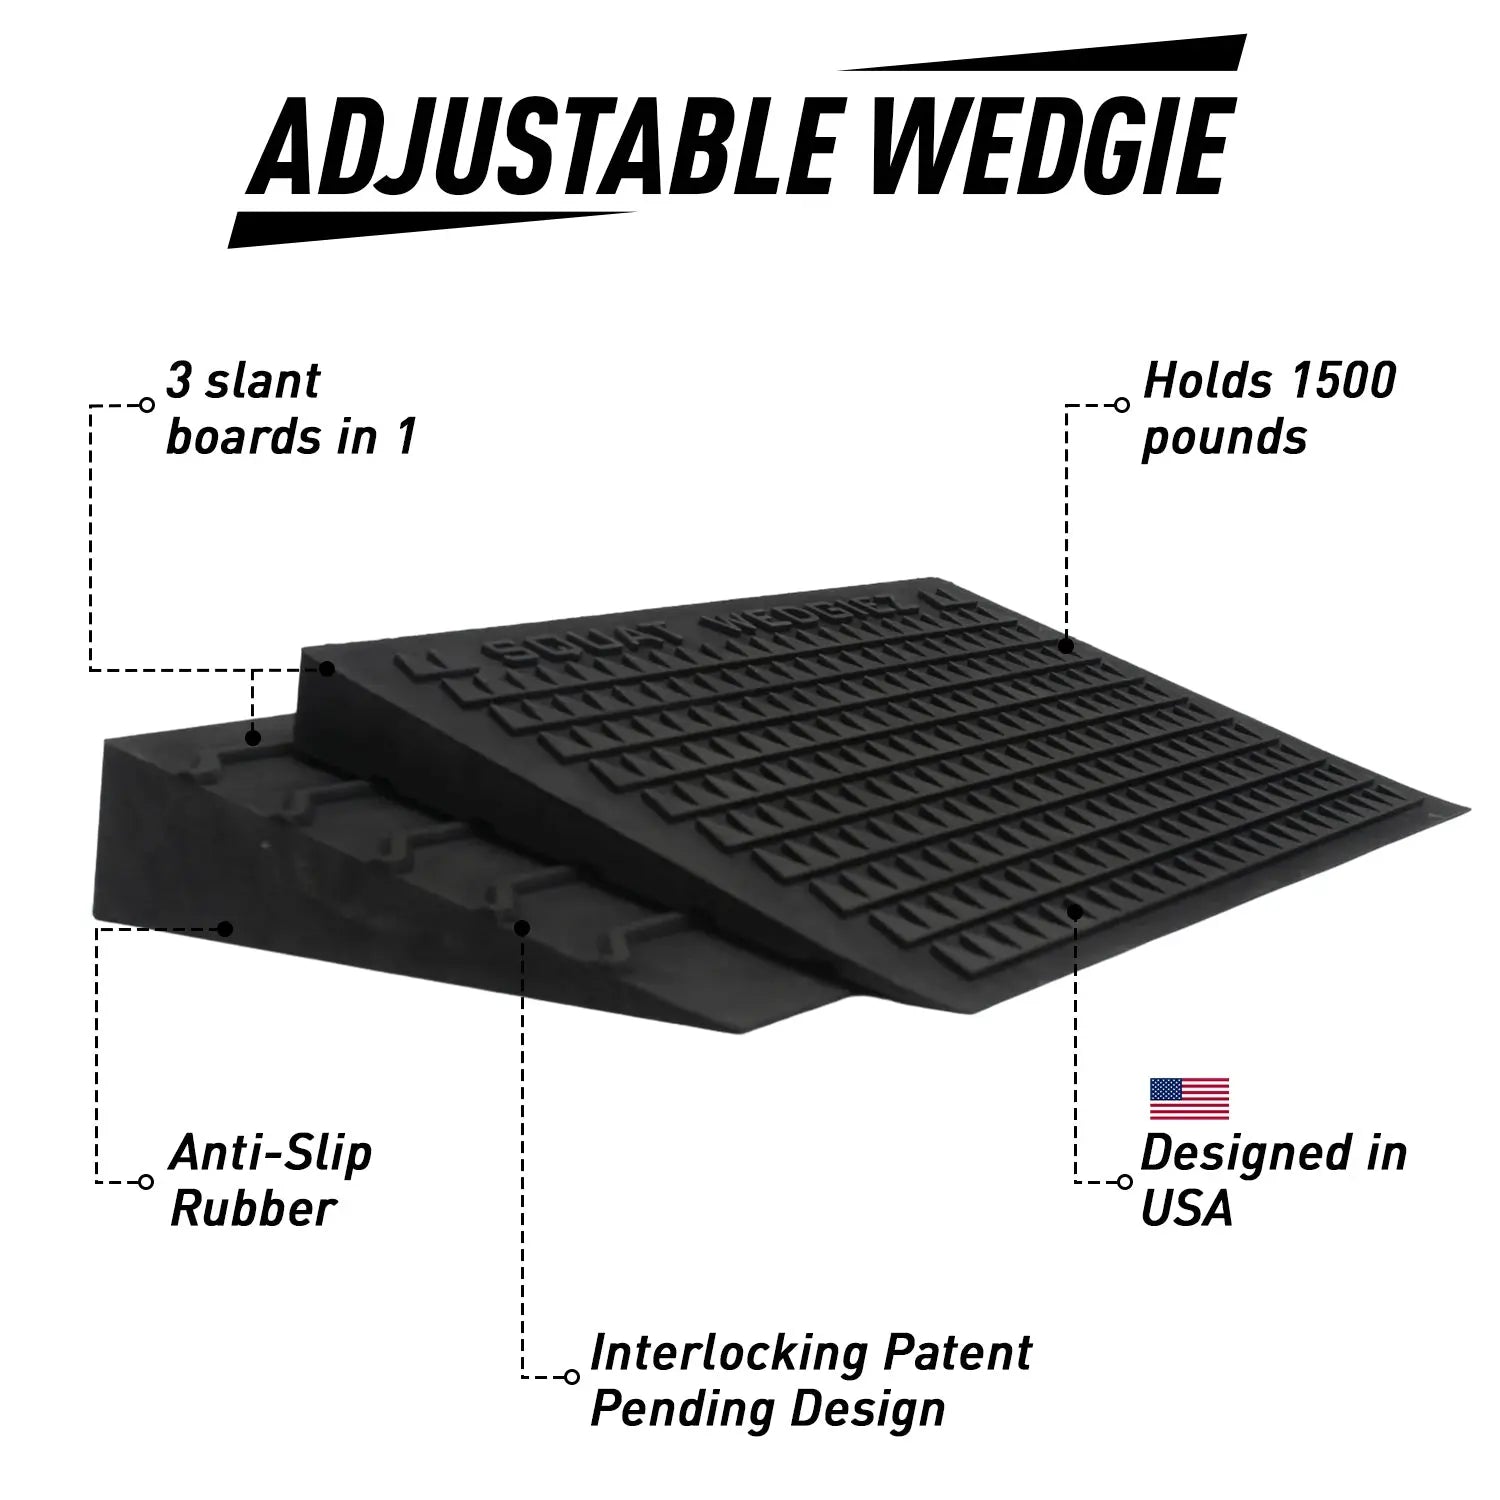 Adjustable Wedgie Squat Wedges